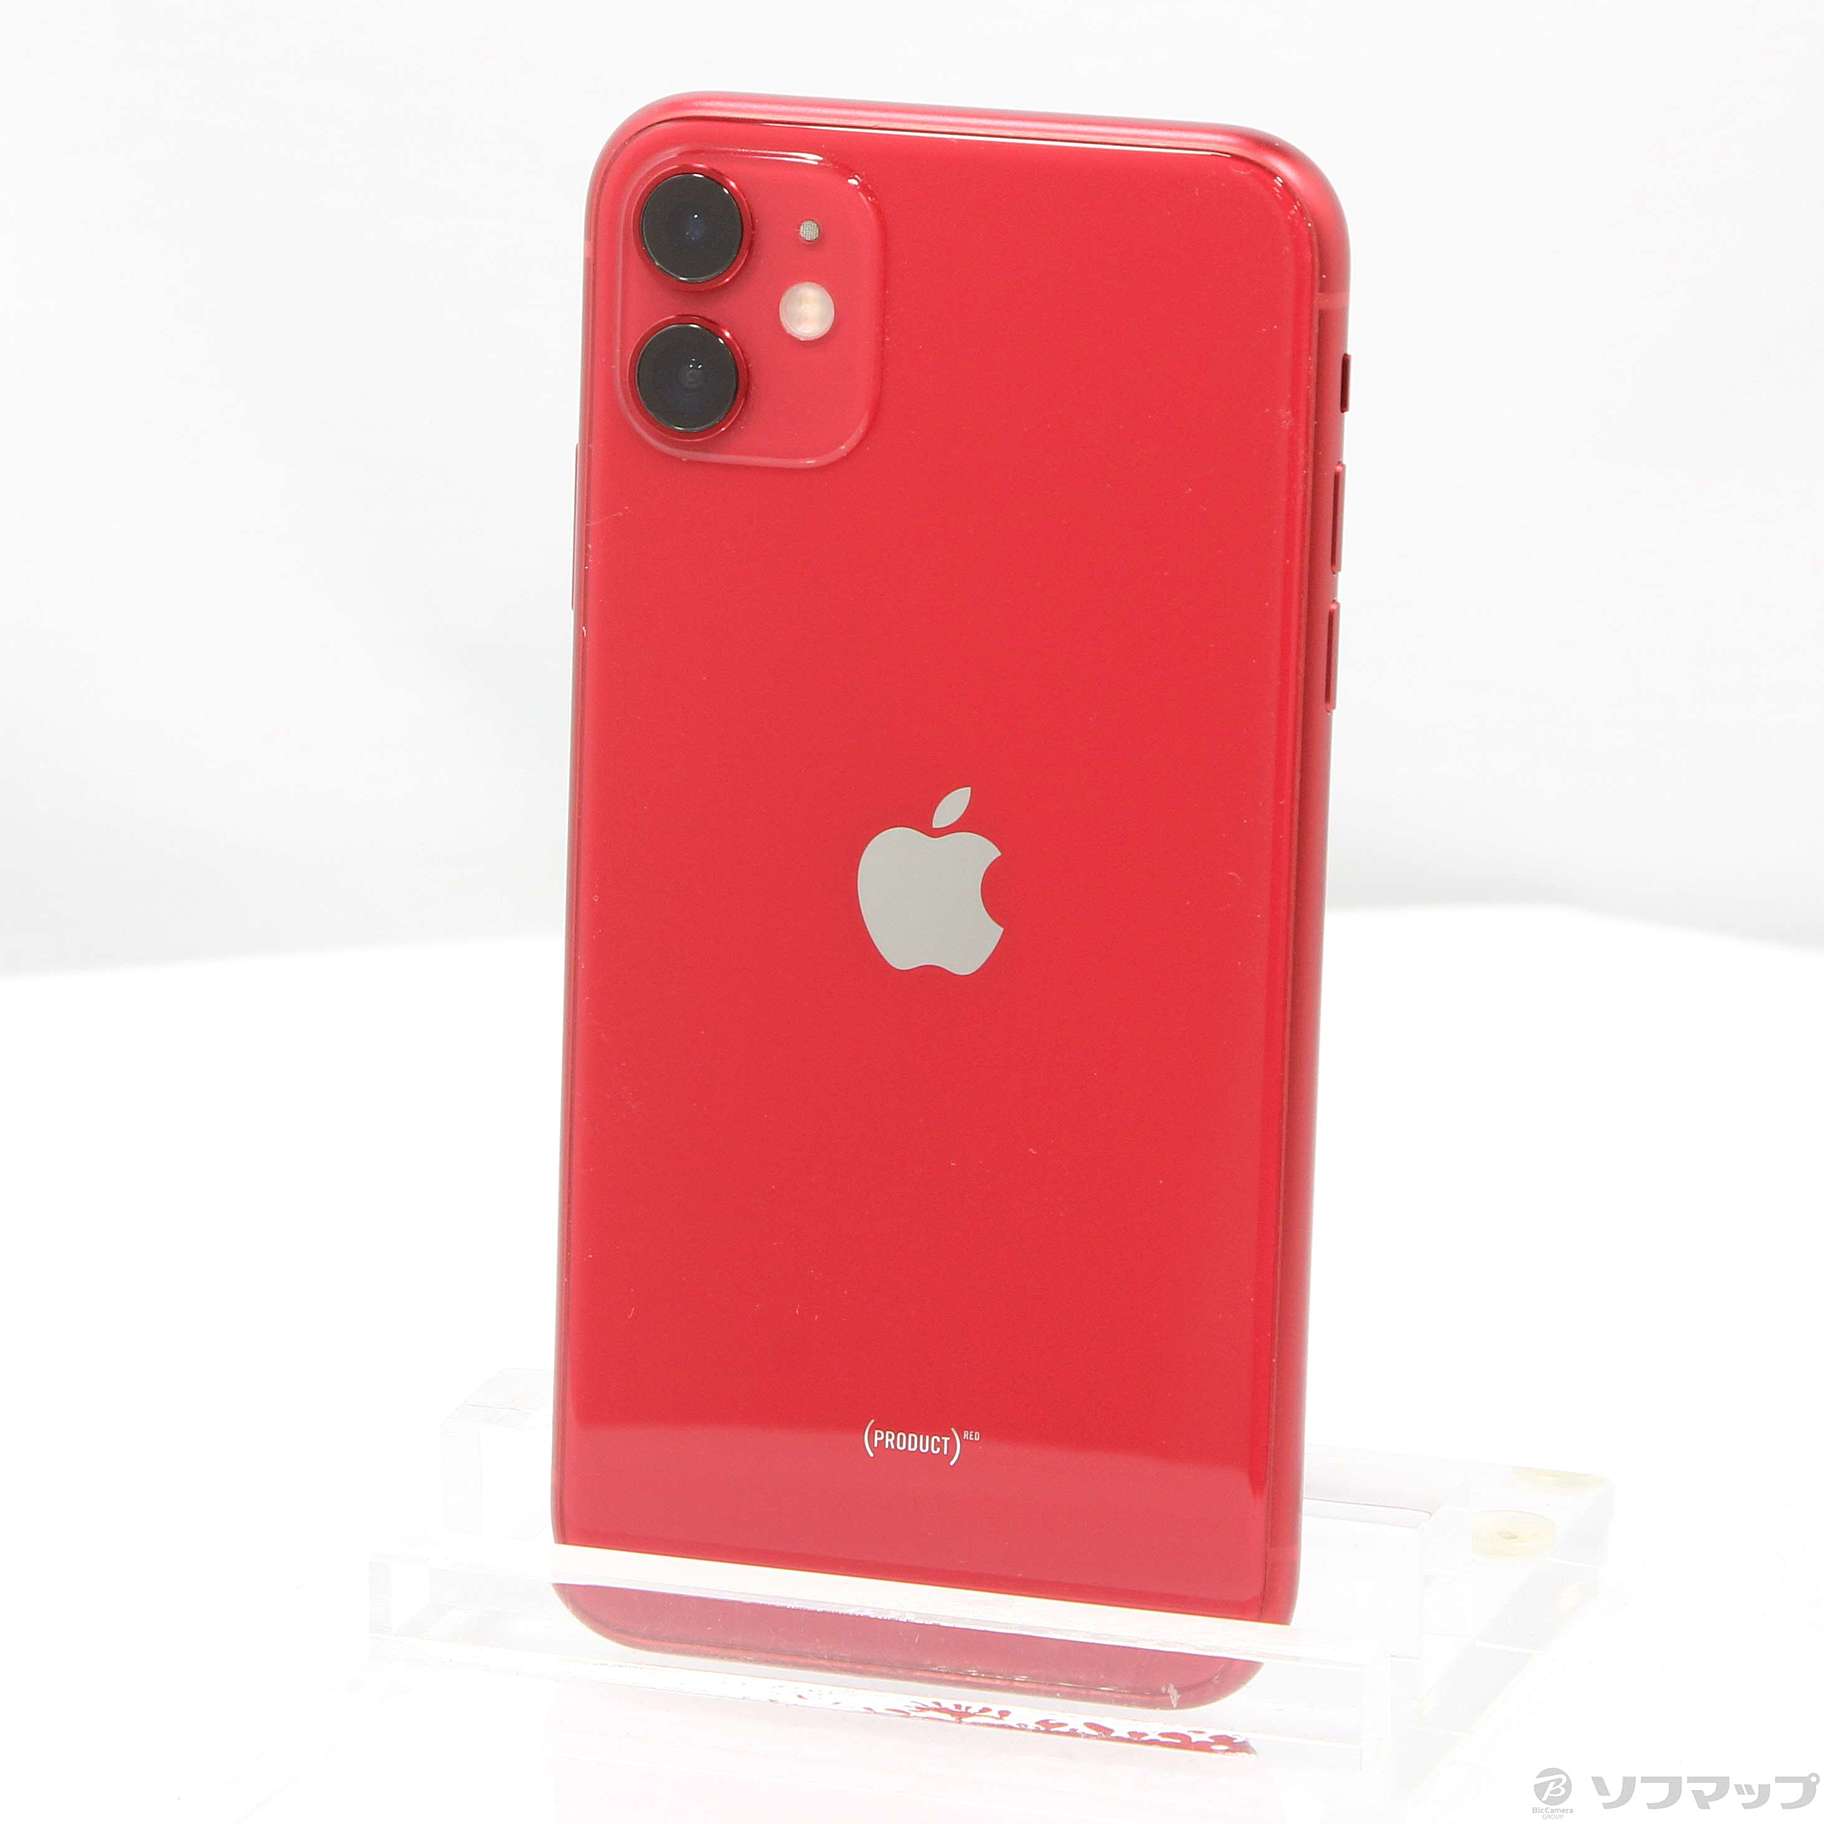 Apple iPhone11 128GB SIMフリー レッド MWM32J/A